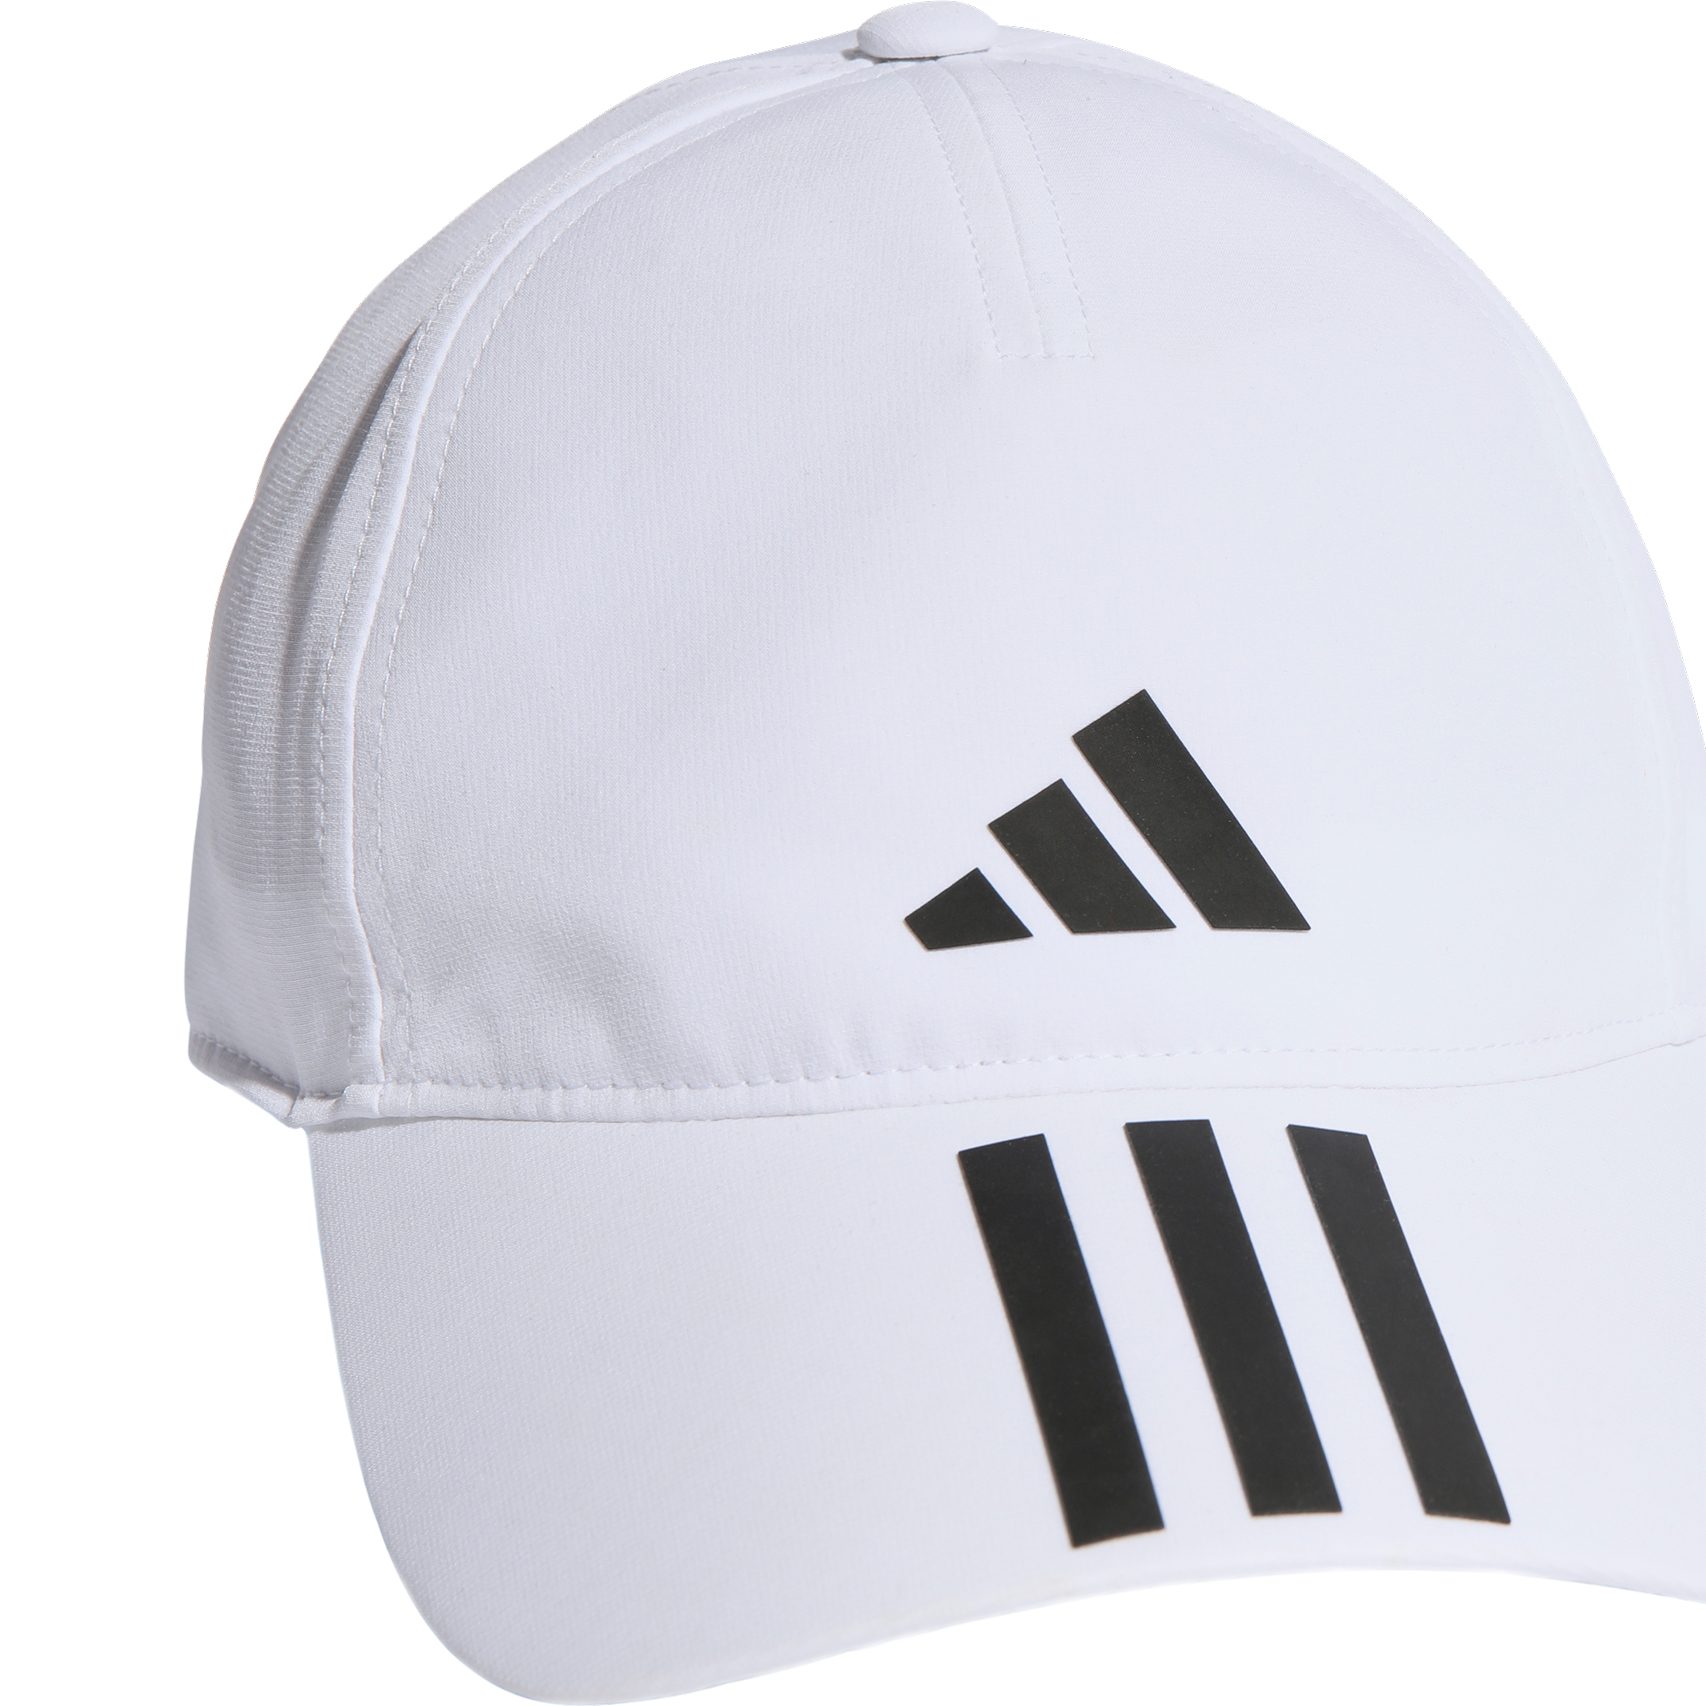 white Sport Cap adidas Baseball 3-Stripes Training AEROREADY at Shop Bittl - Running